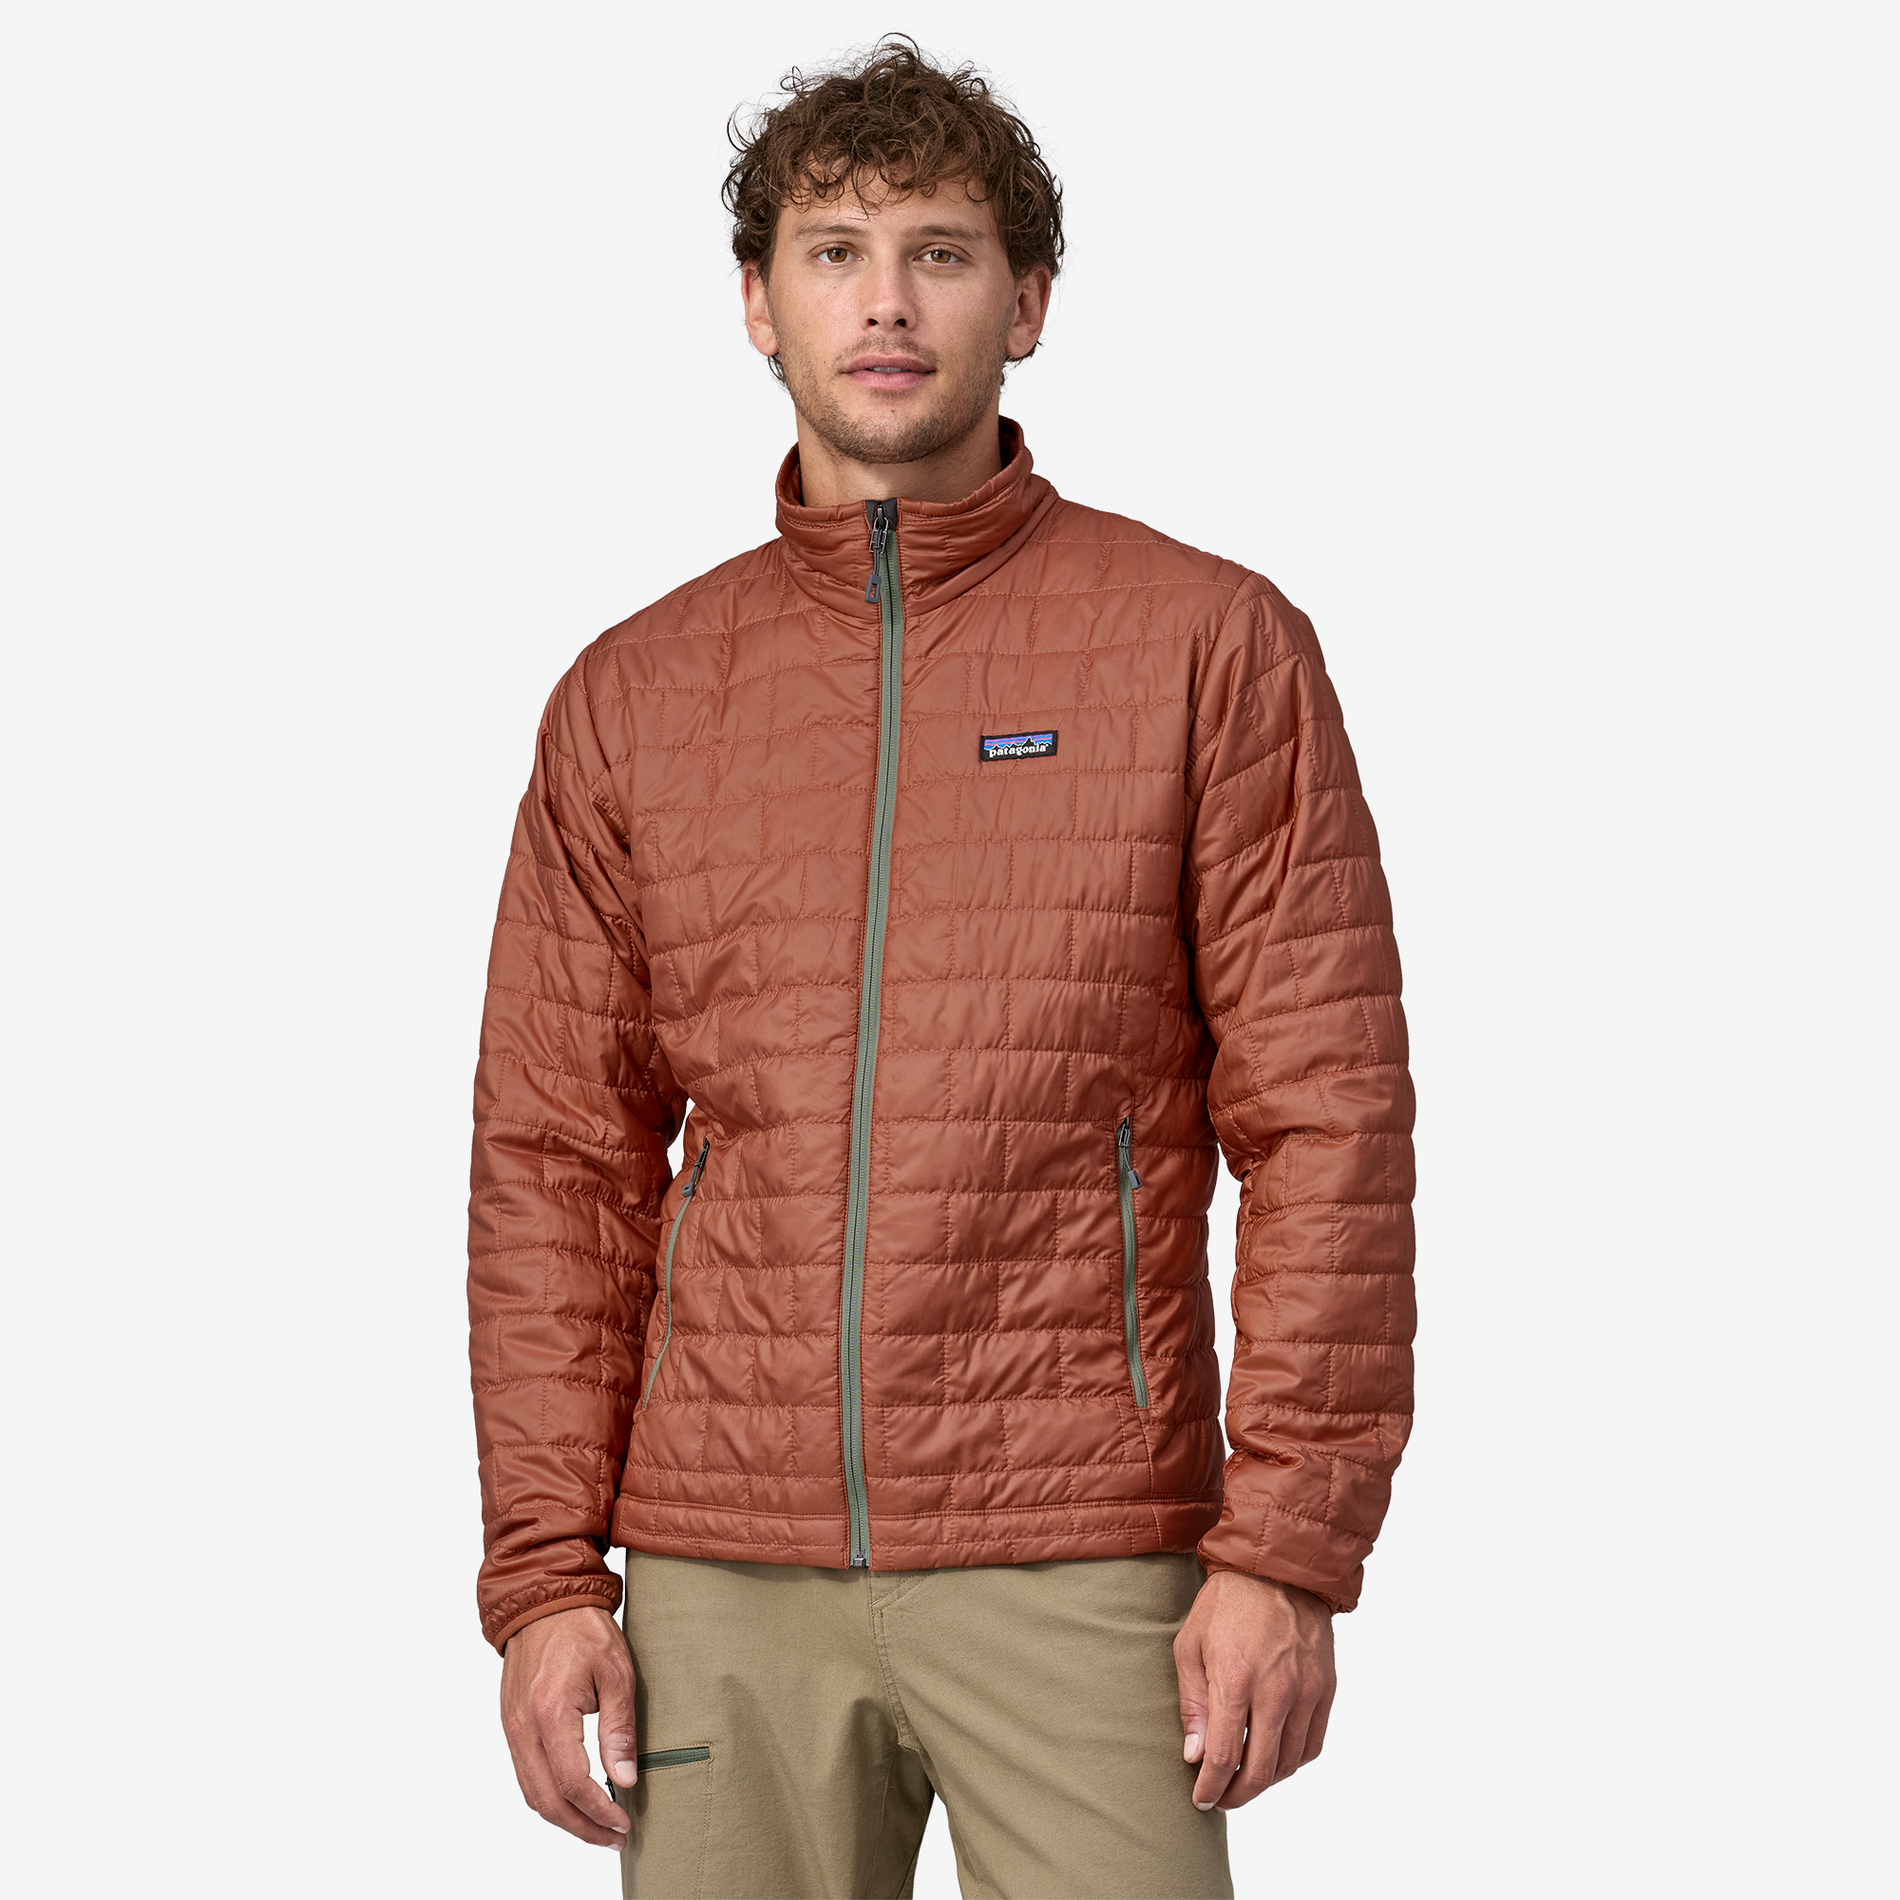 Patagonia Nano Puff Jacket sz L - Coats & jackets